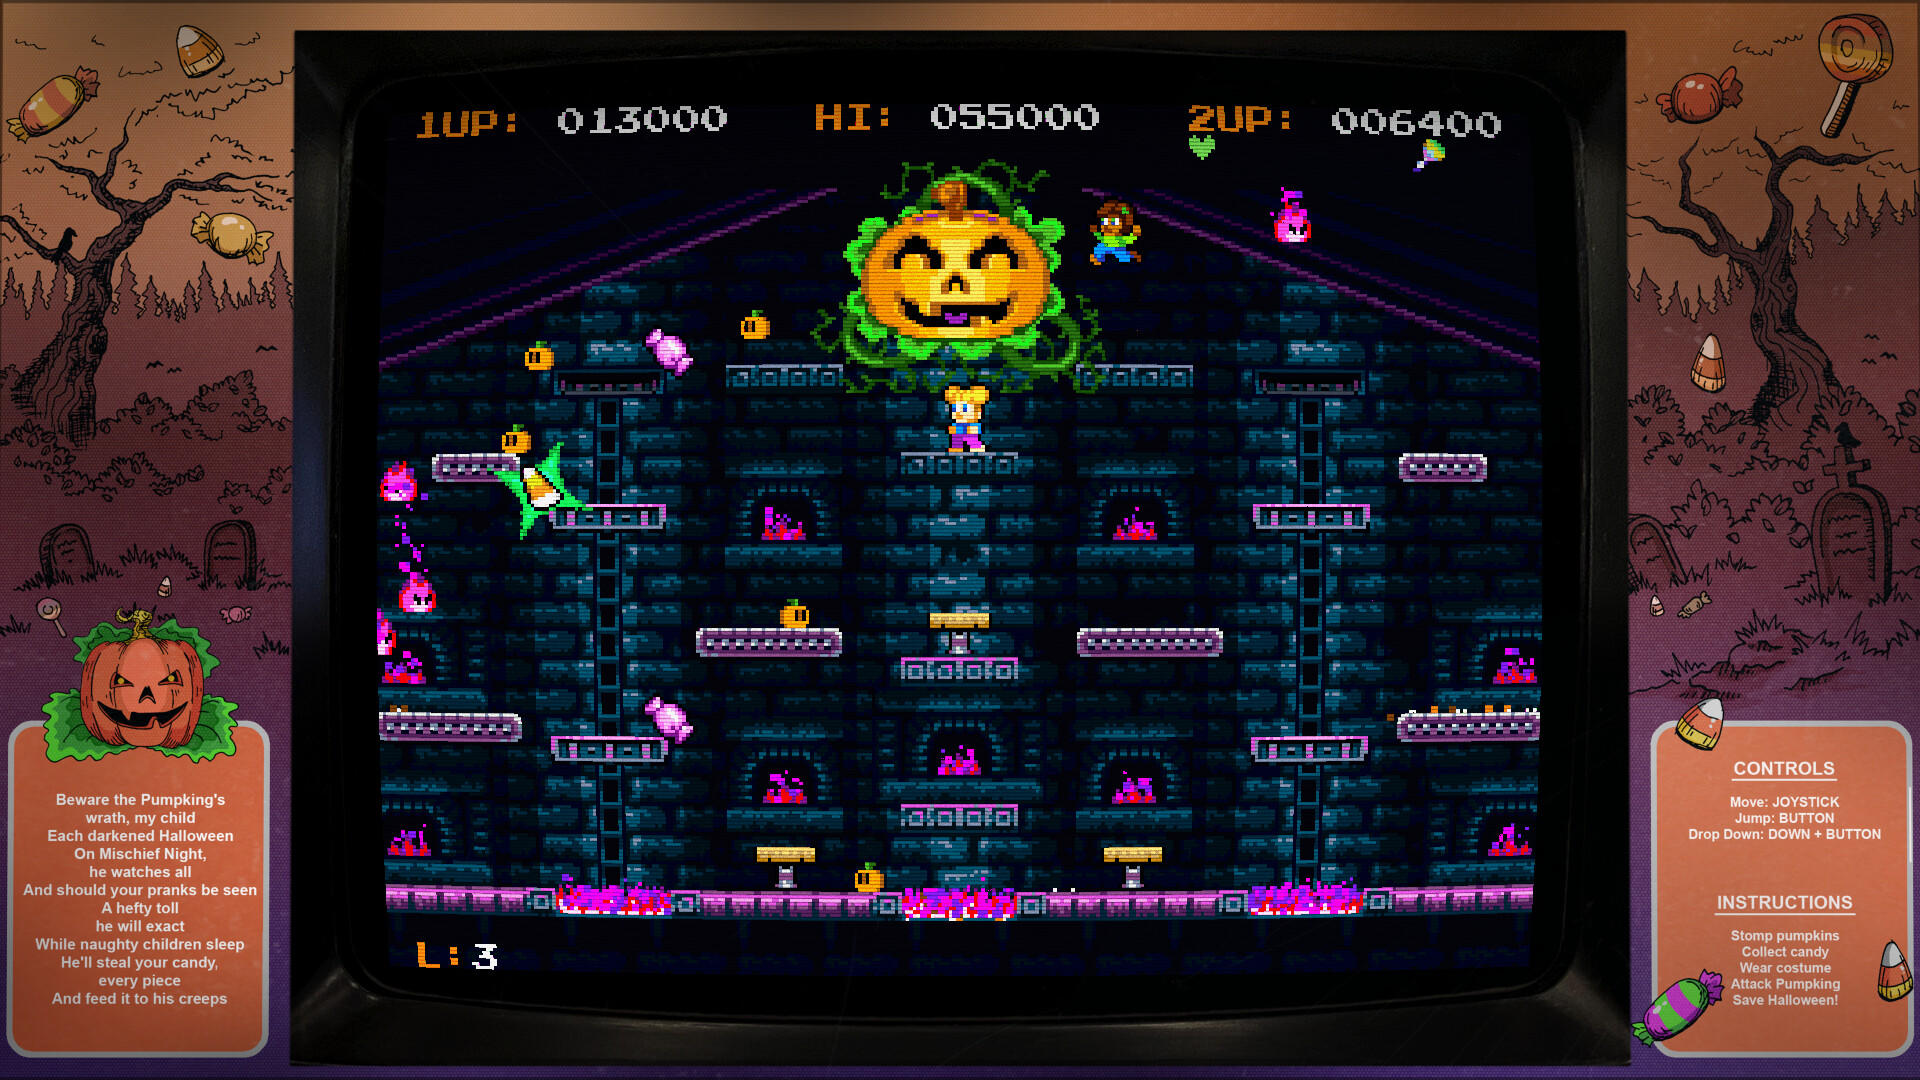 Digital Eclipse Arcade: Candy Creeps screenshot game